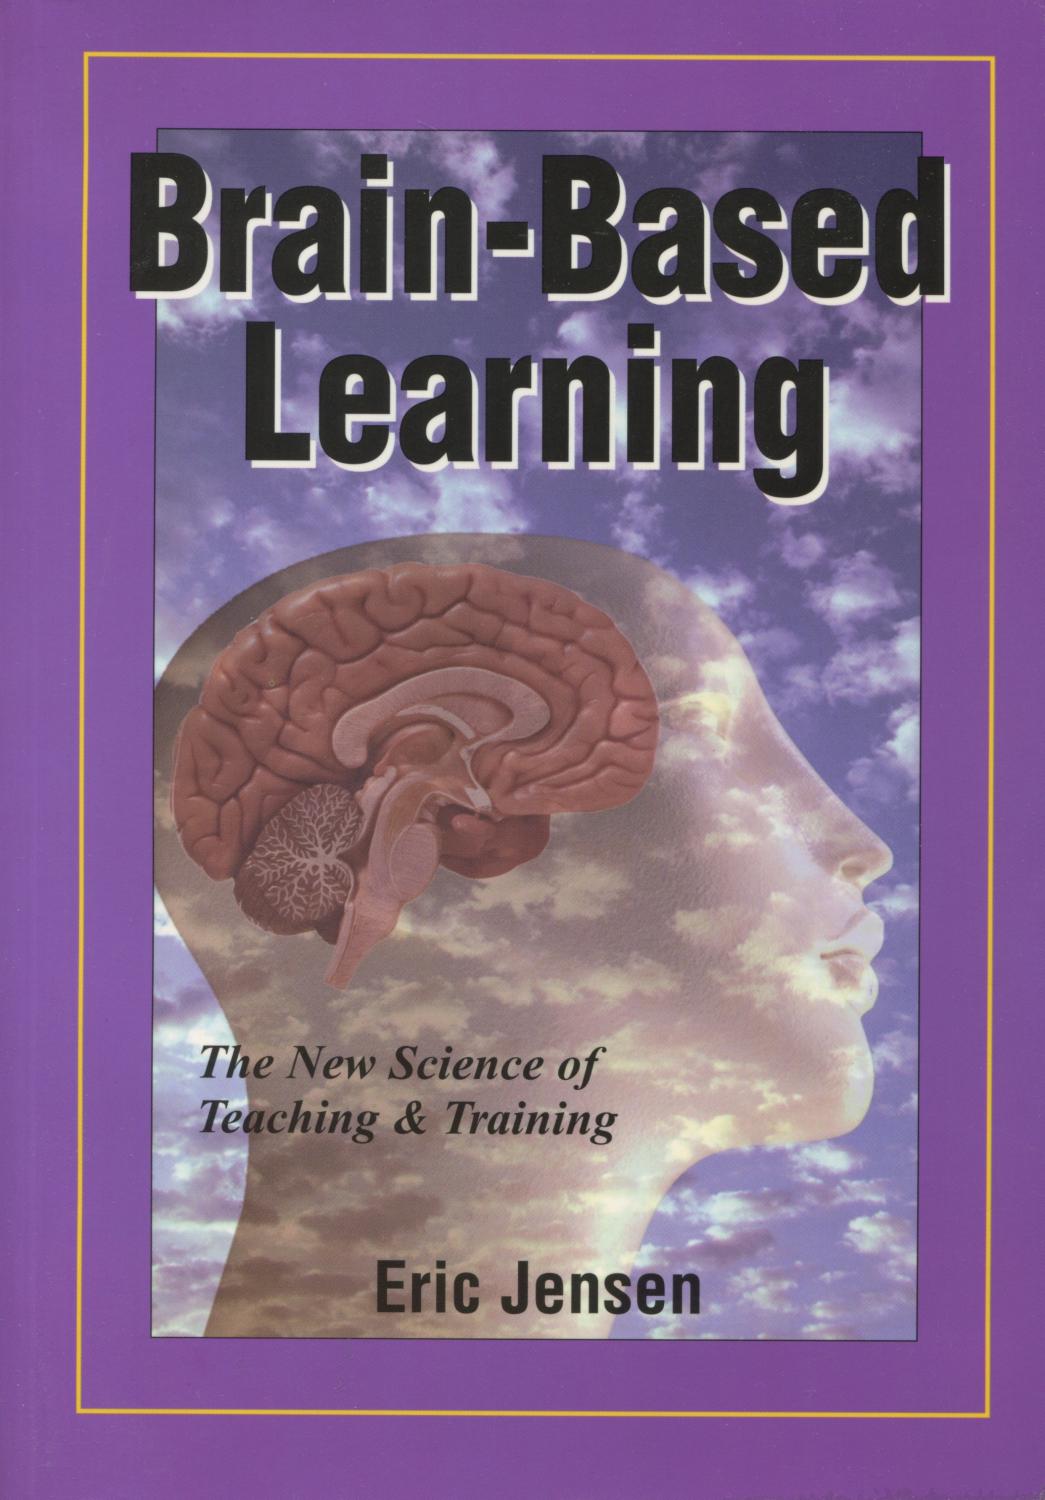 eric jensen book brain based learning